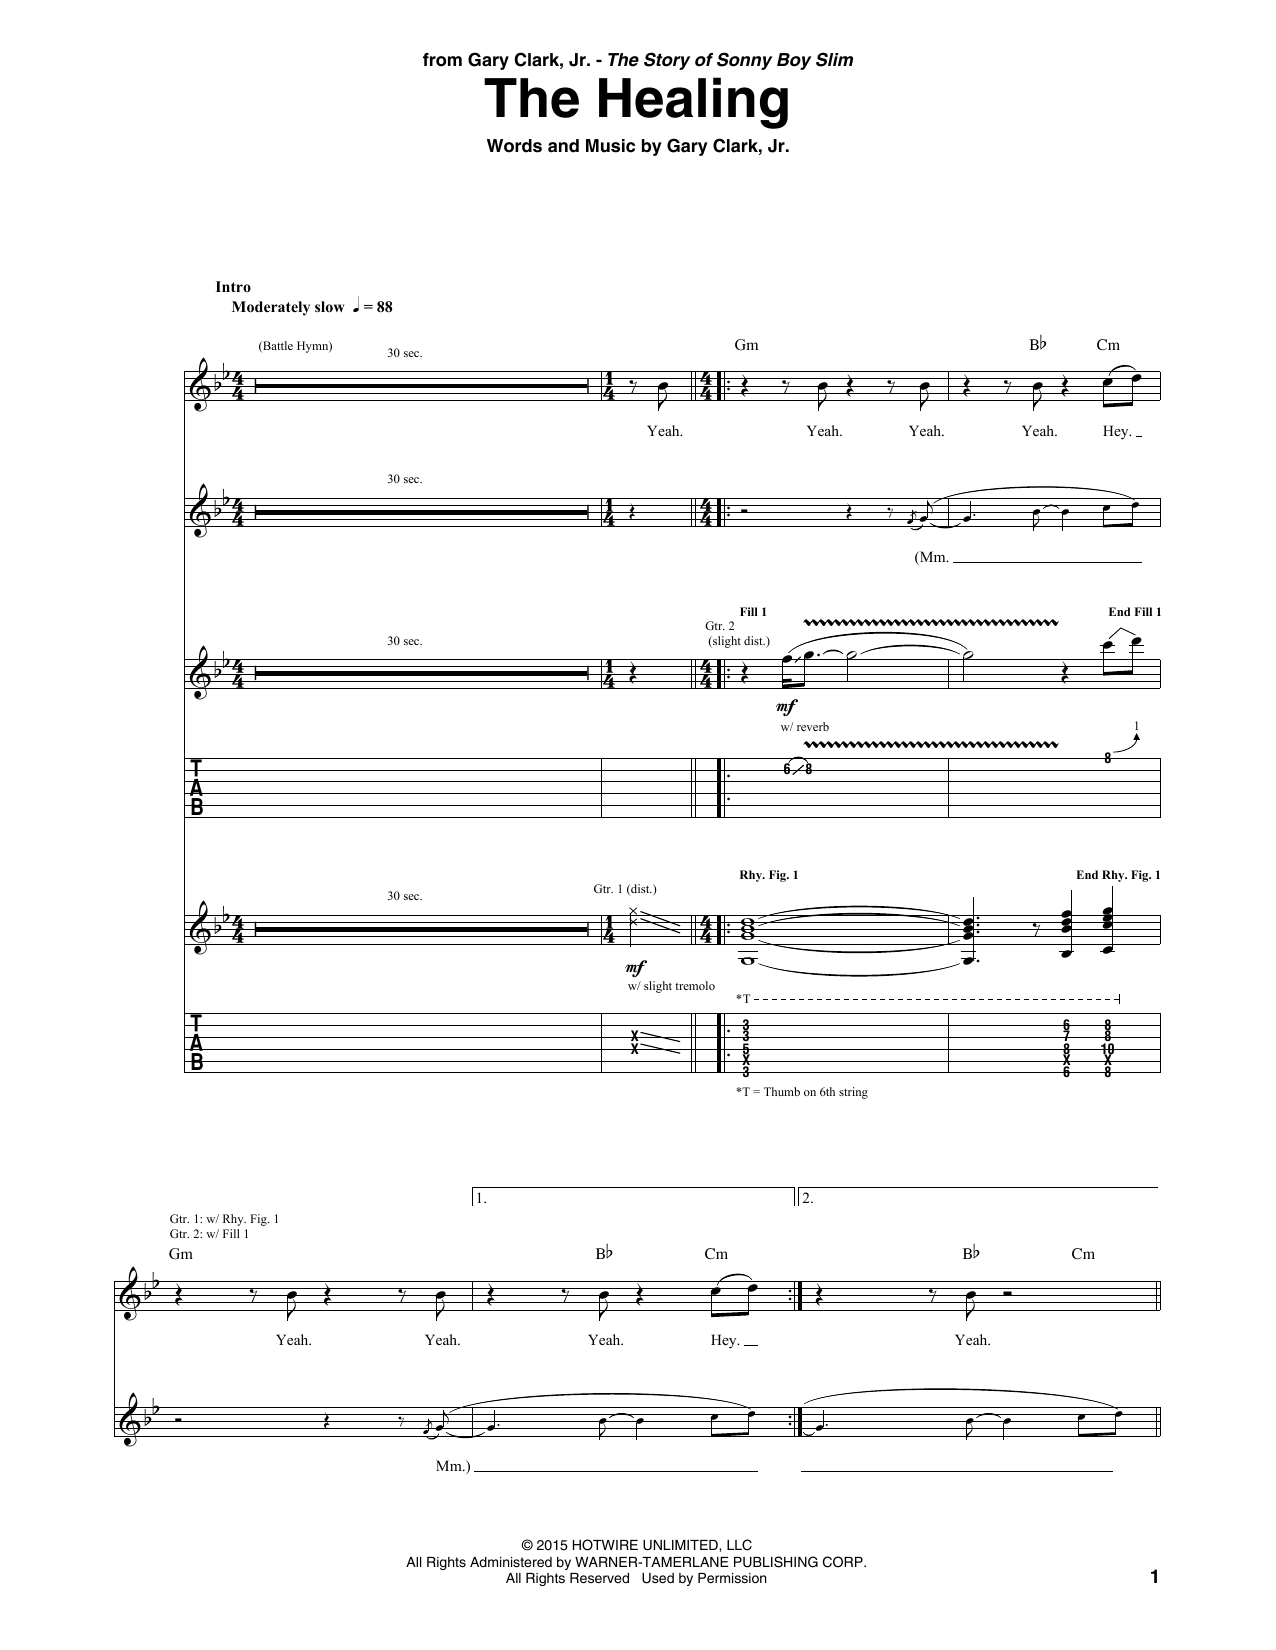 Gary Clark, Jr. The Healing Sheet Music Notes & Chords for Guitar Tab - Download or Print PDF